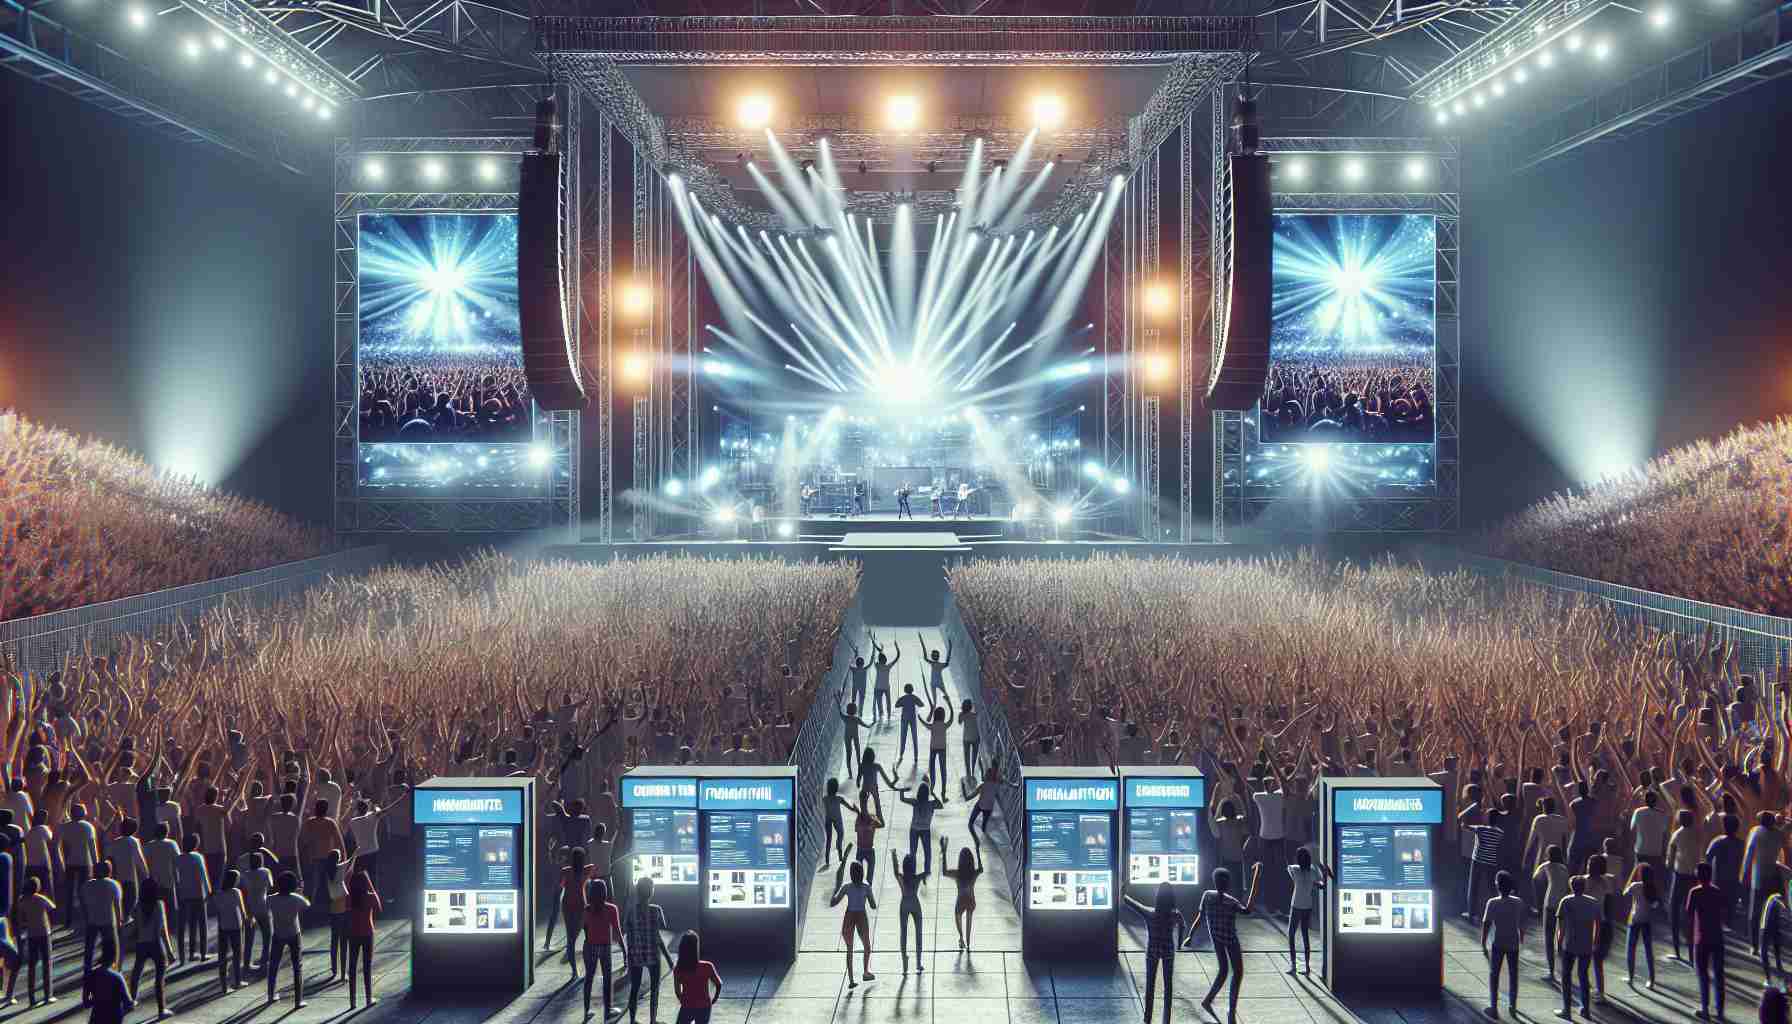 Palantir’s Rock Concert-Style Boot Camps Drive Customer Recruitment